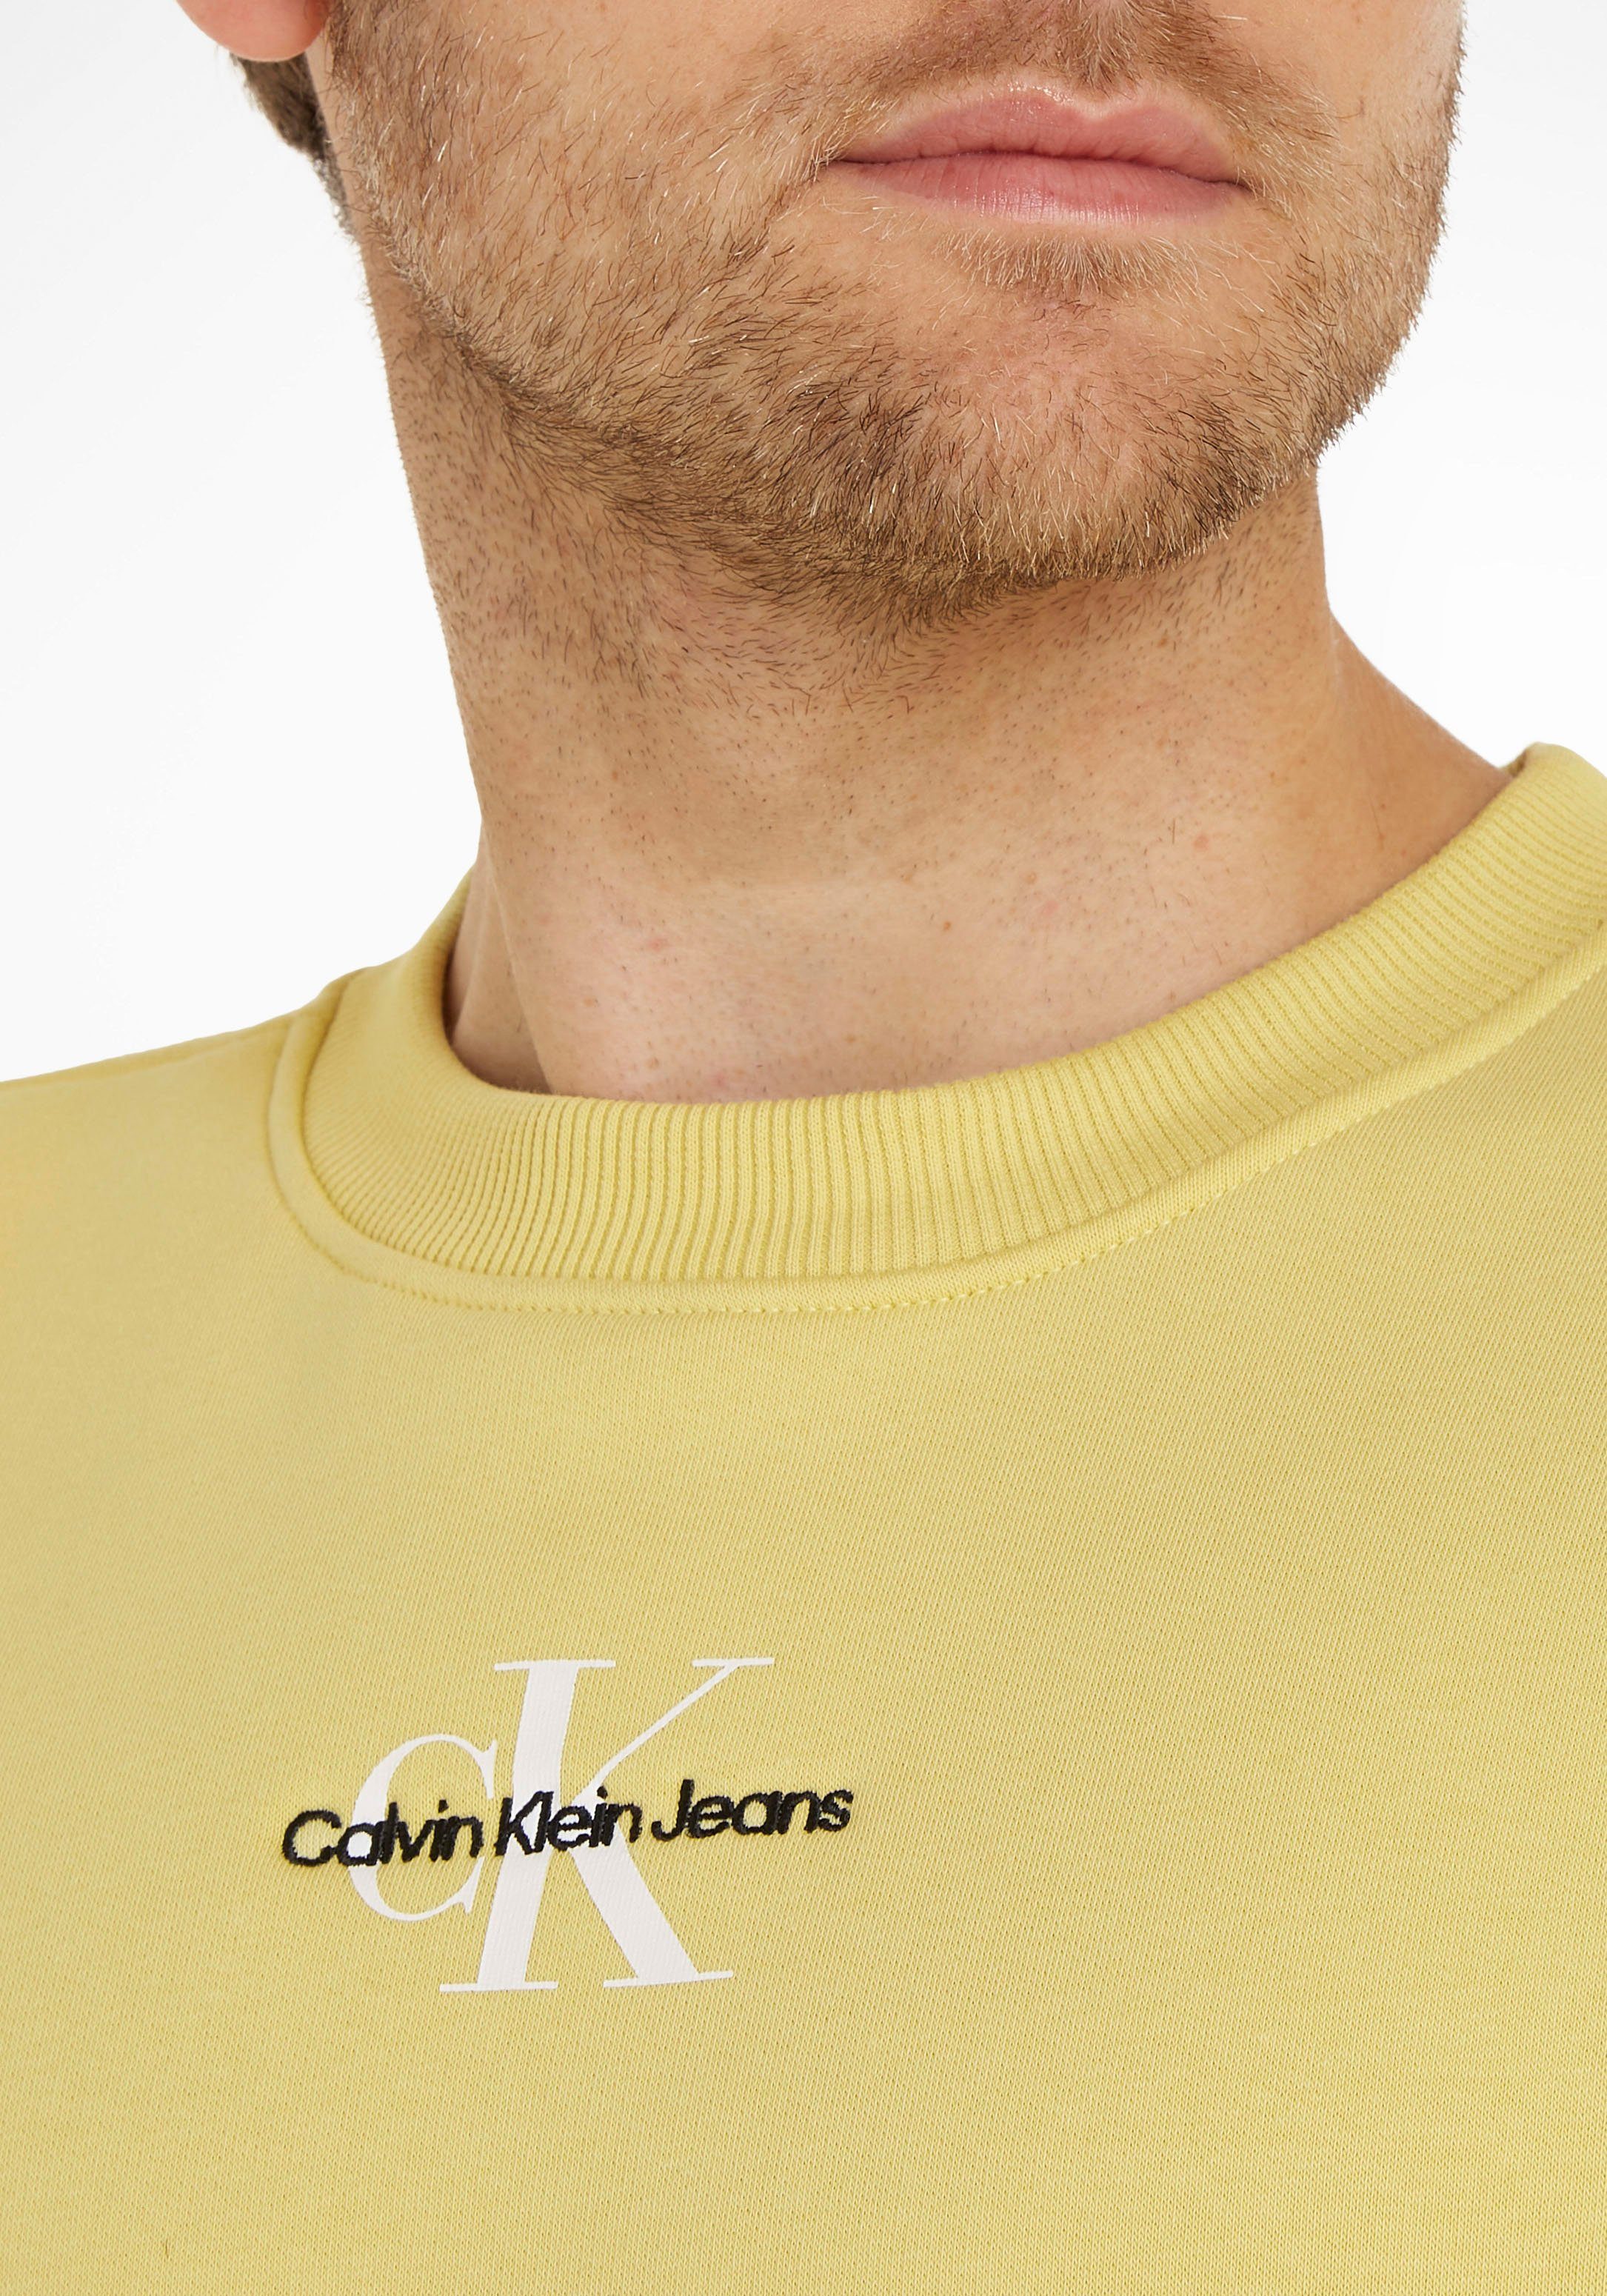 Calvin Jeans CREW Klein MONOLOGO Sand Yellow NECK Sweatshirt